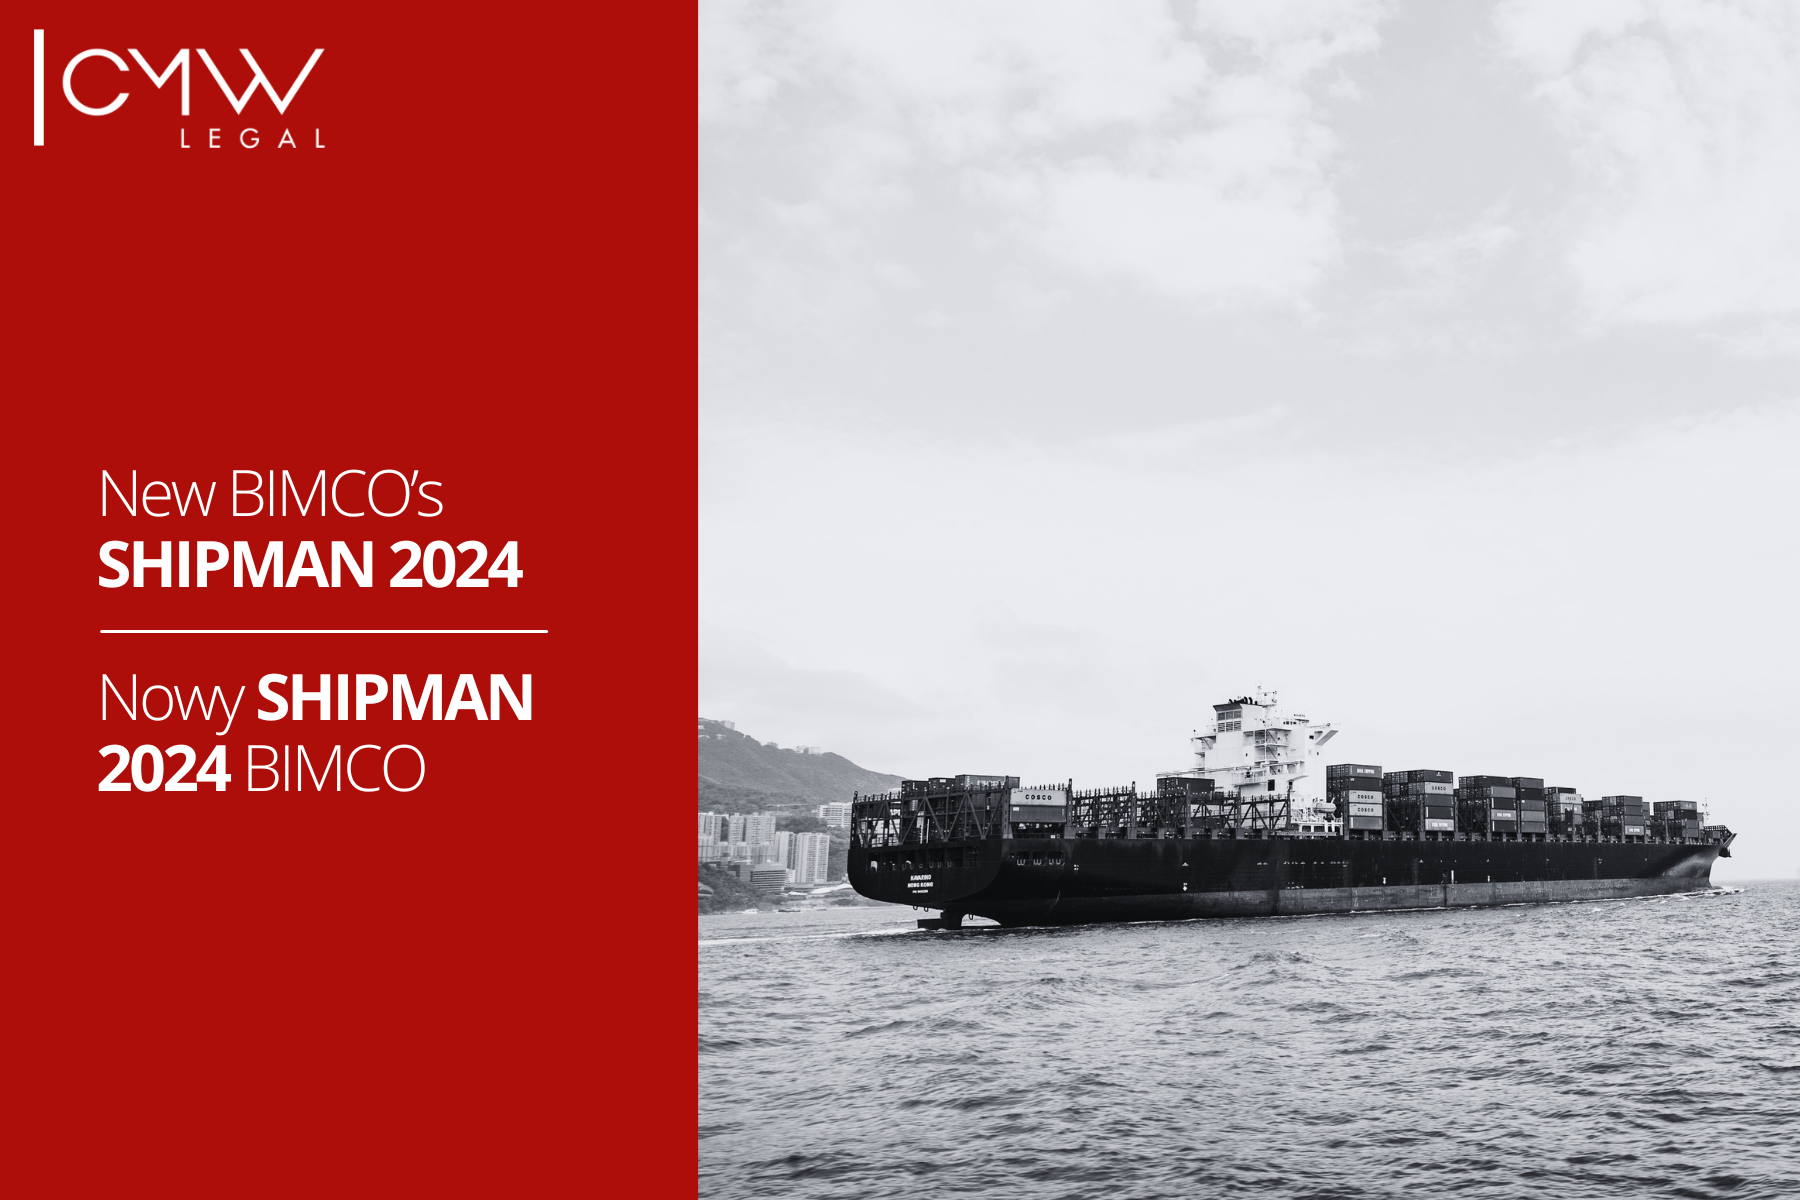  BIMCO has published SHIPMAN 2024 standard form